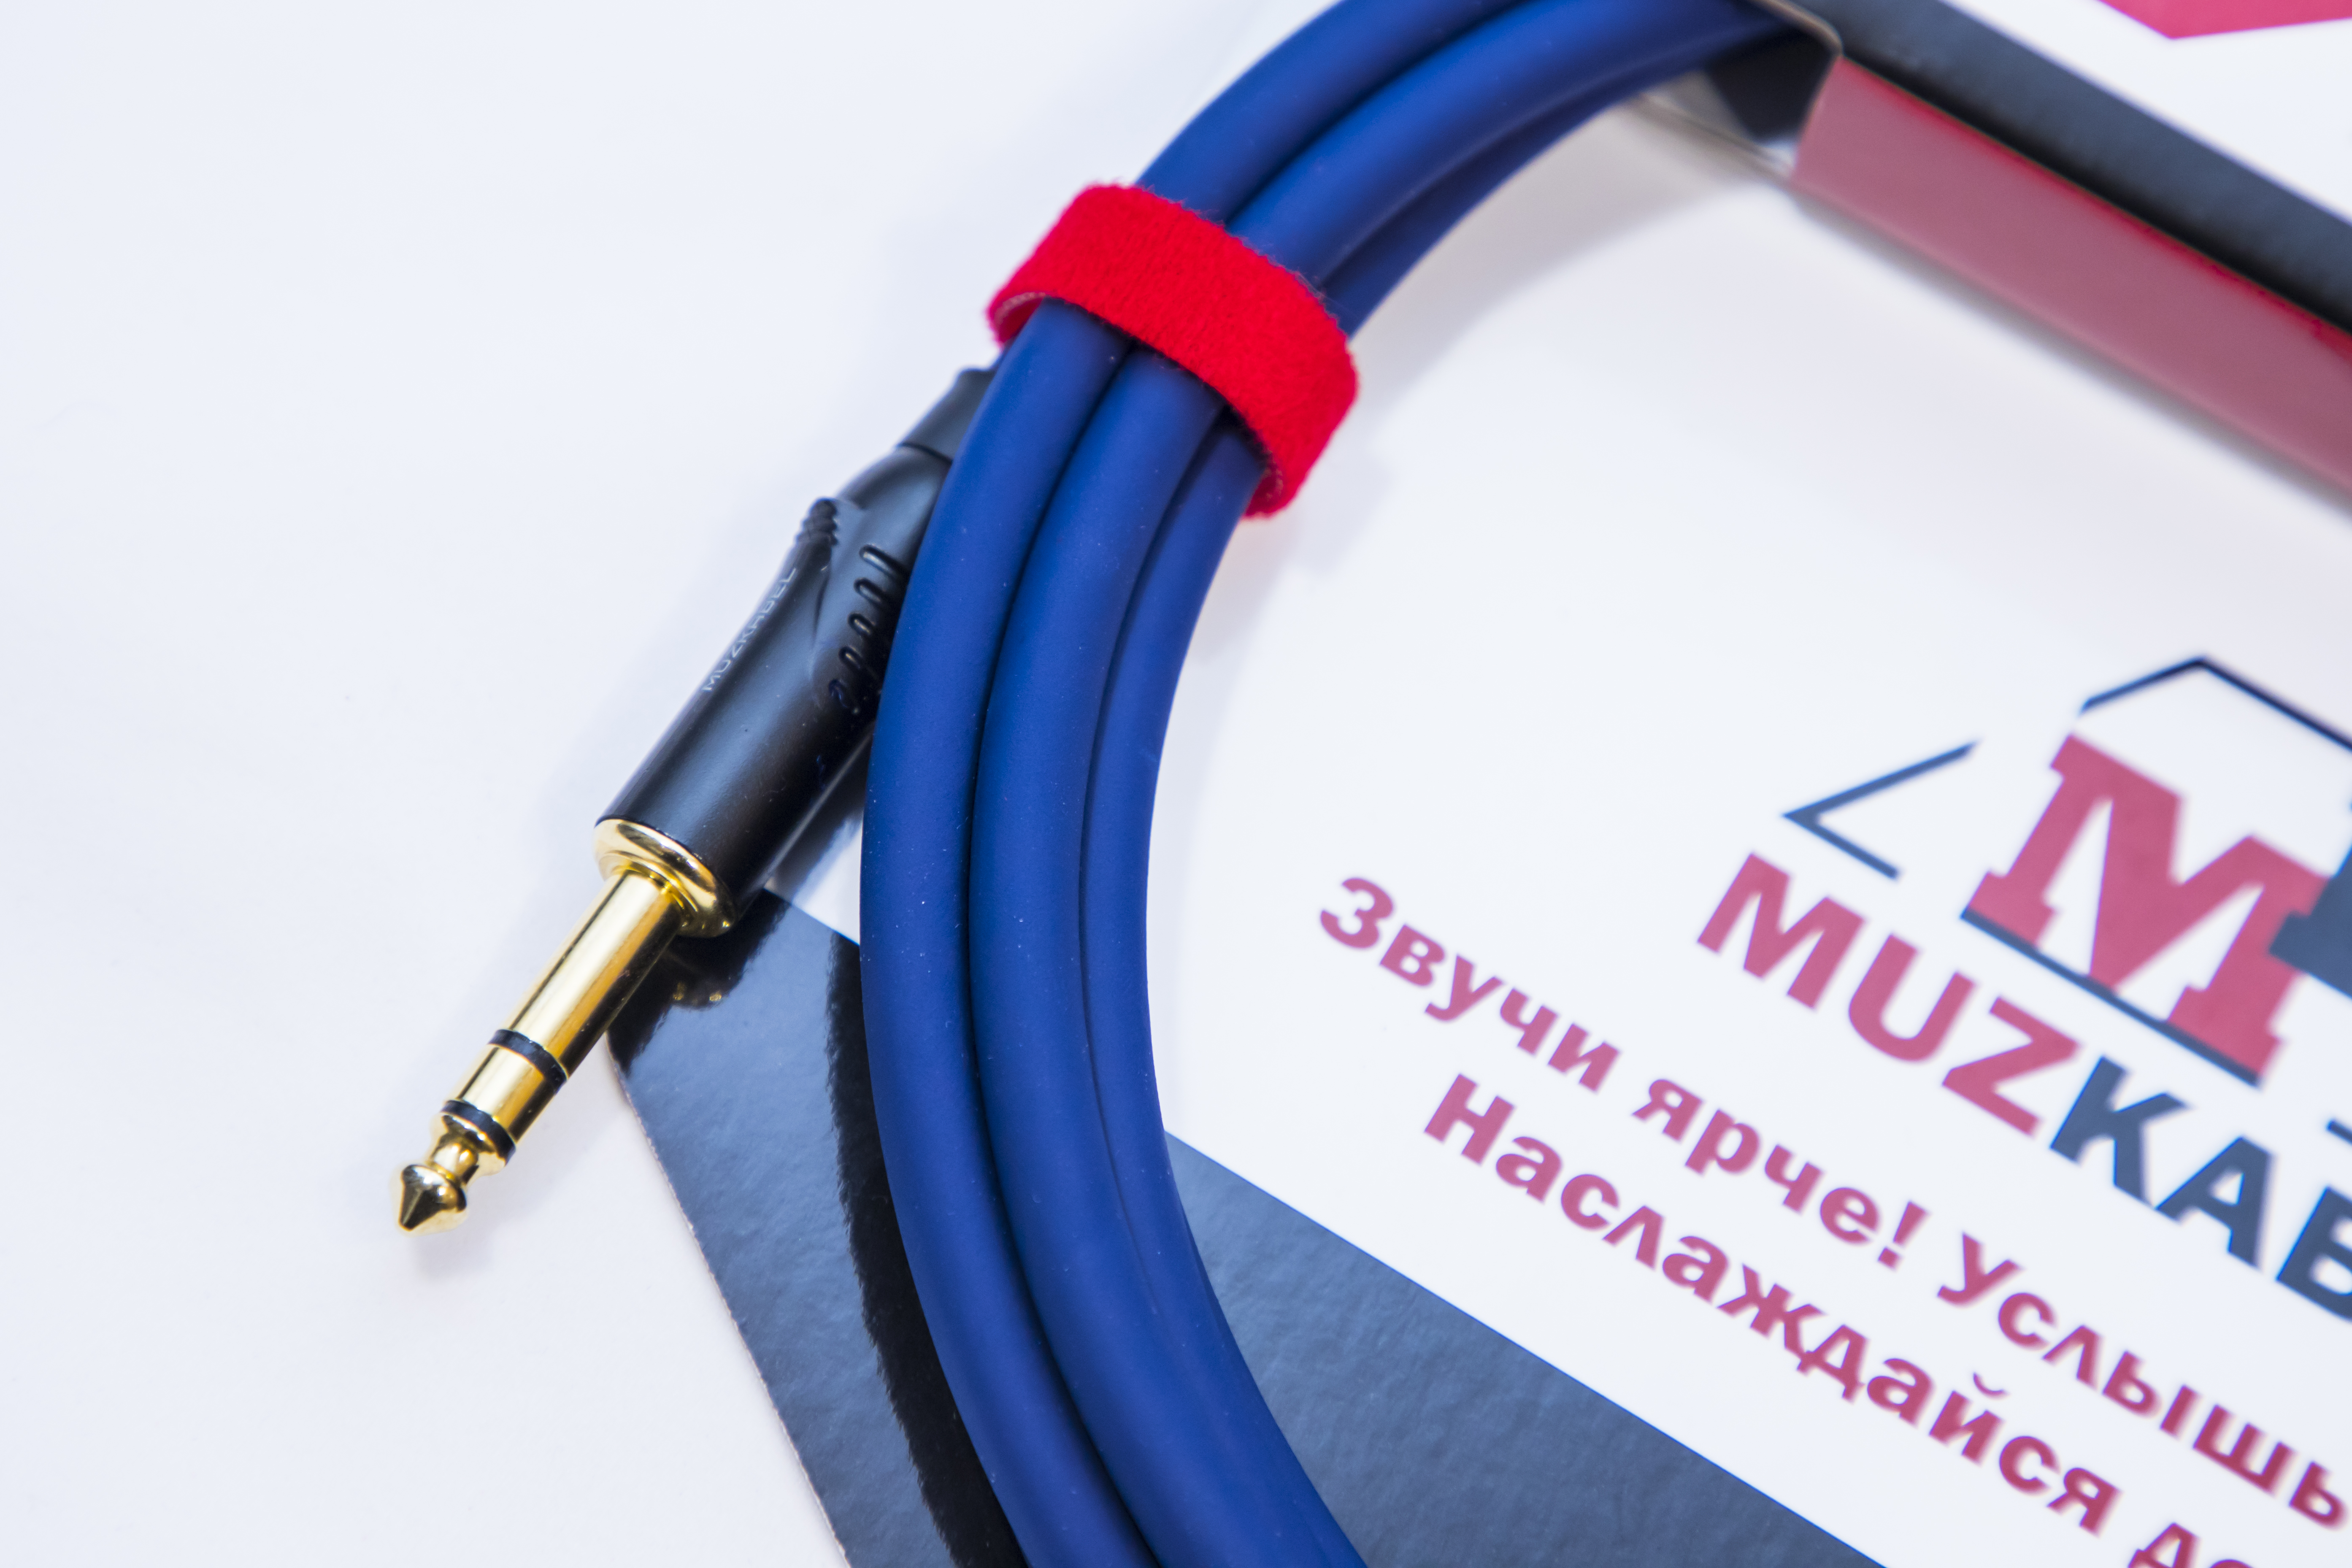 Аудио кабель MUZKABEL BXFMK1S - 1,5 метра, XLR (папа) - JACK (стерео)